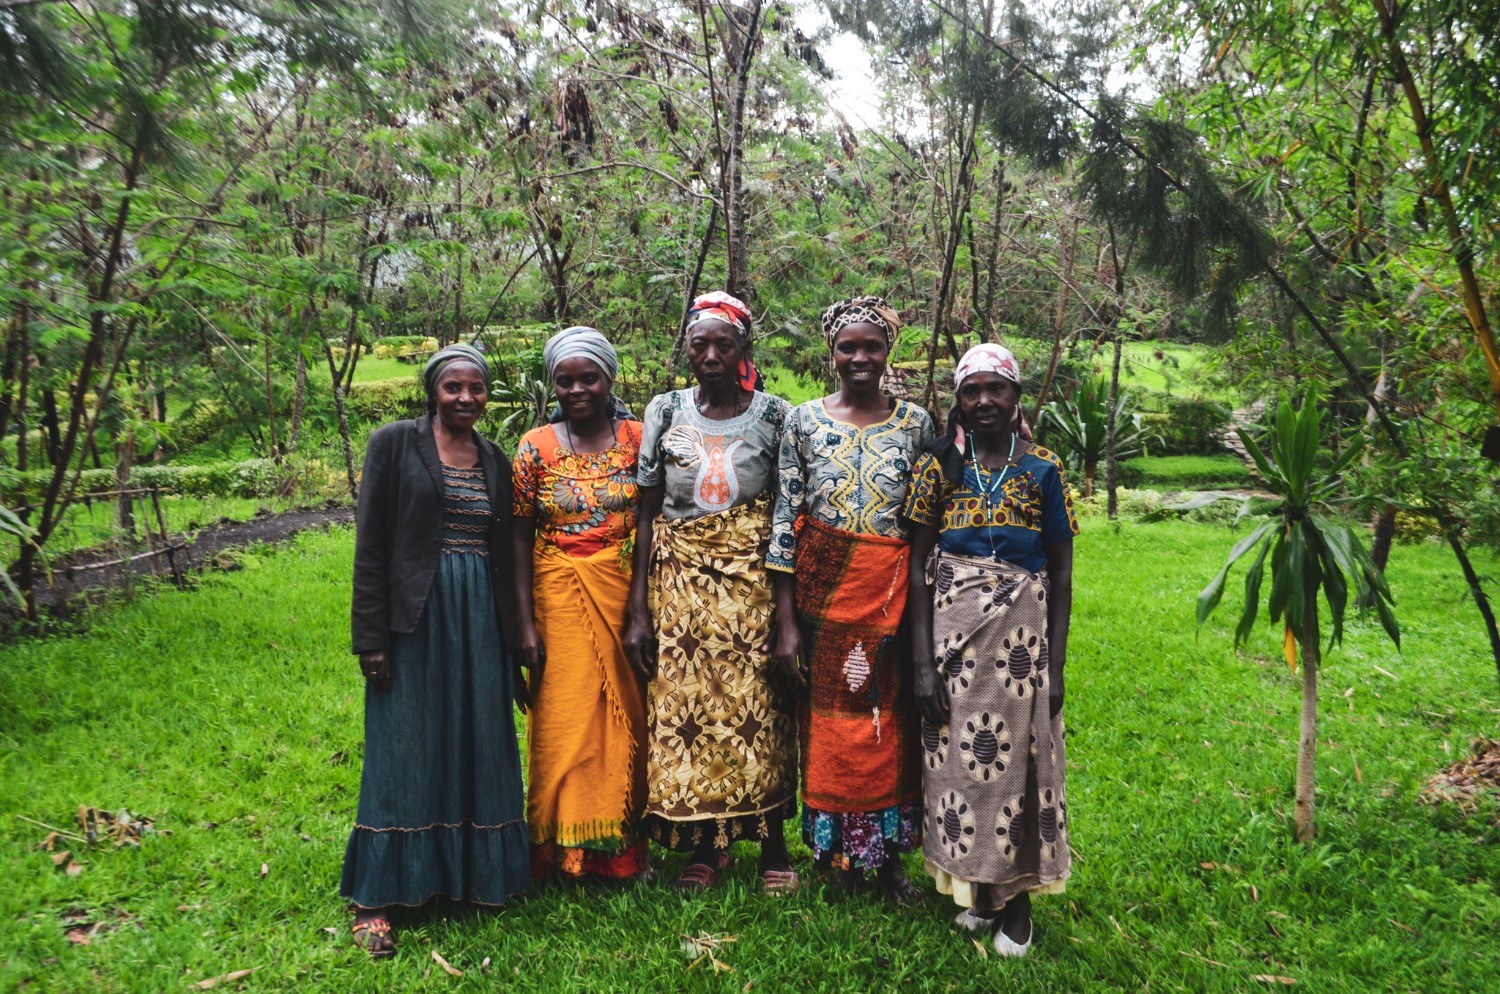 Women of Rwanda standing together to rebuild their broken nation